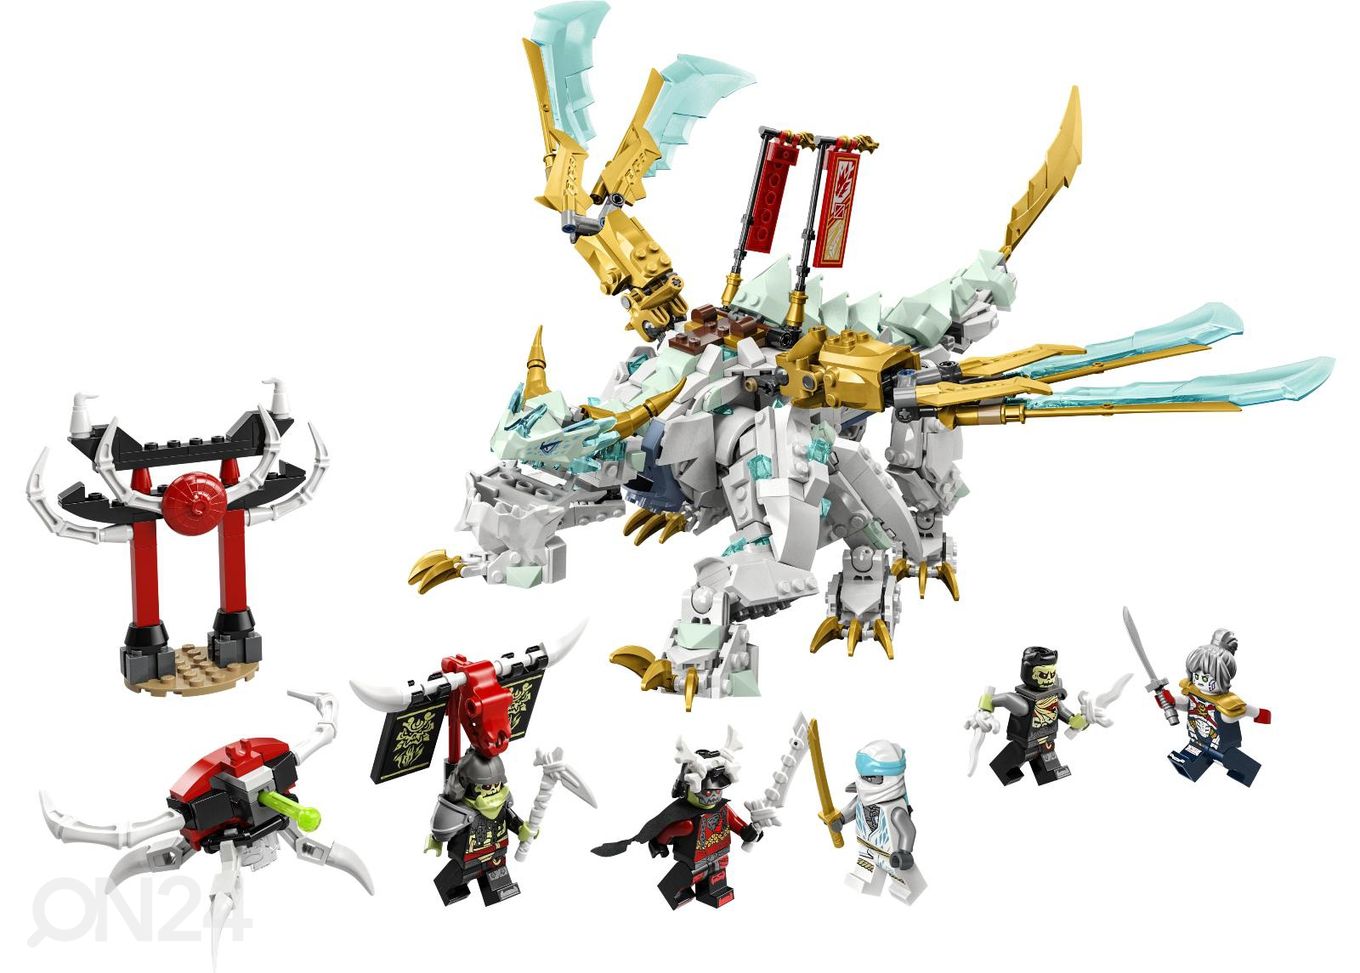 LEGO Ninjago Zane’i Существо Ледяной Дракон увеличить